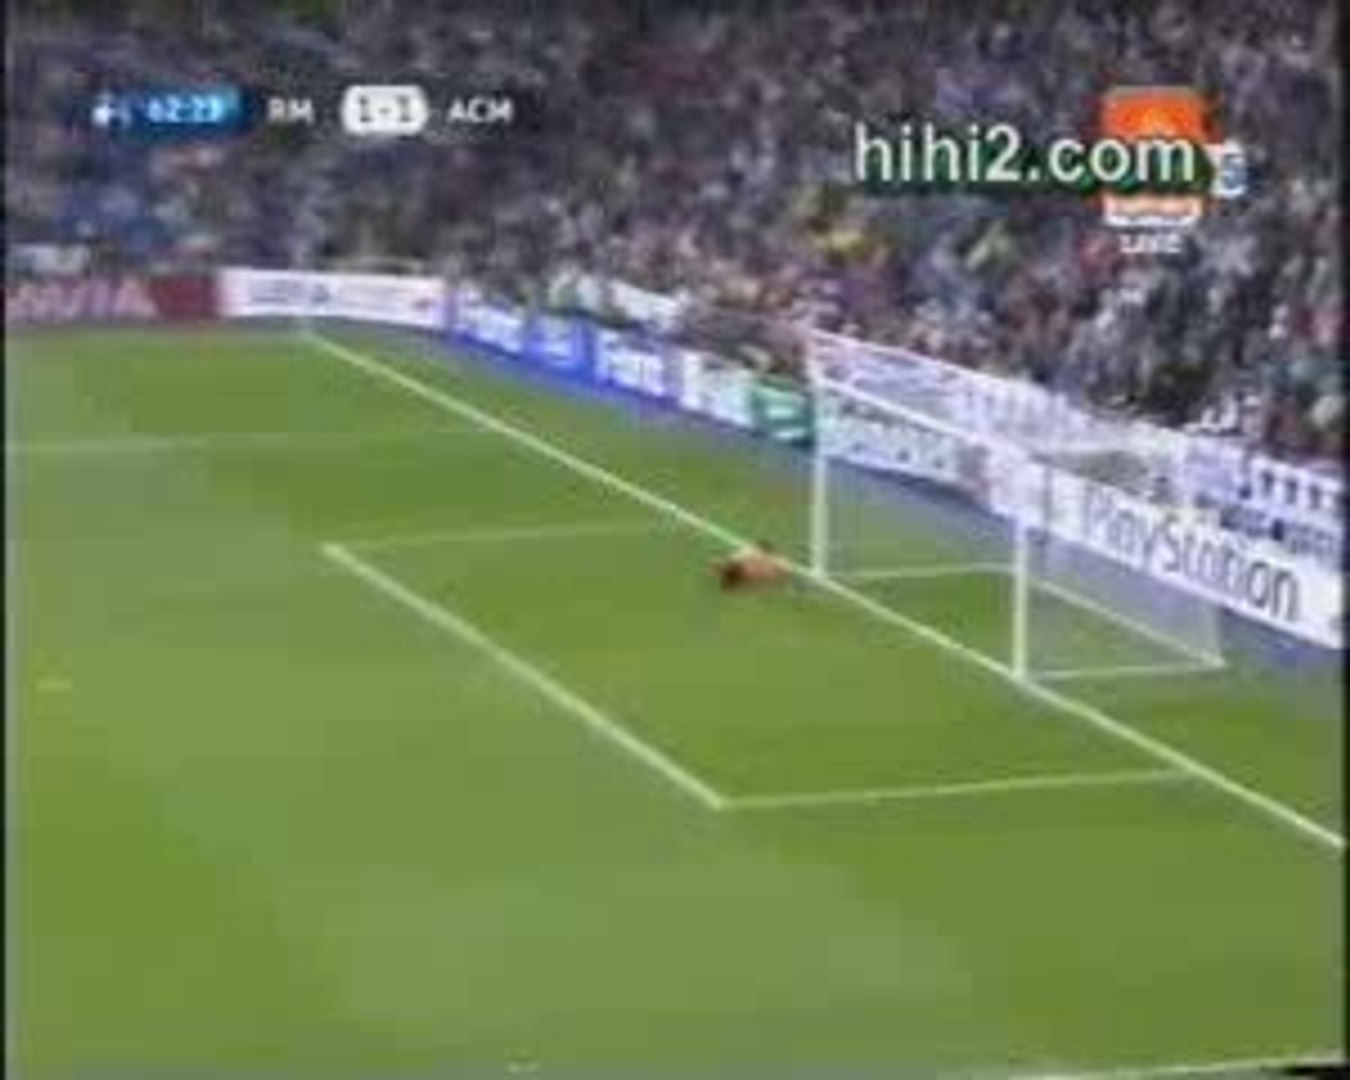 milan ac vs real Pirlo goal - Vidéo Dailymotion